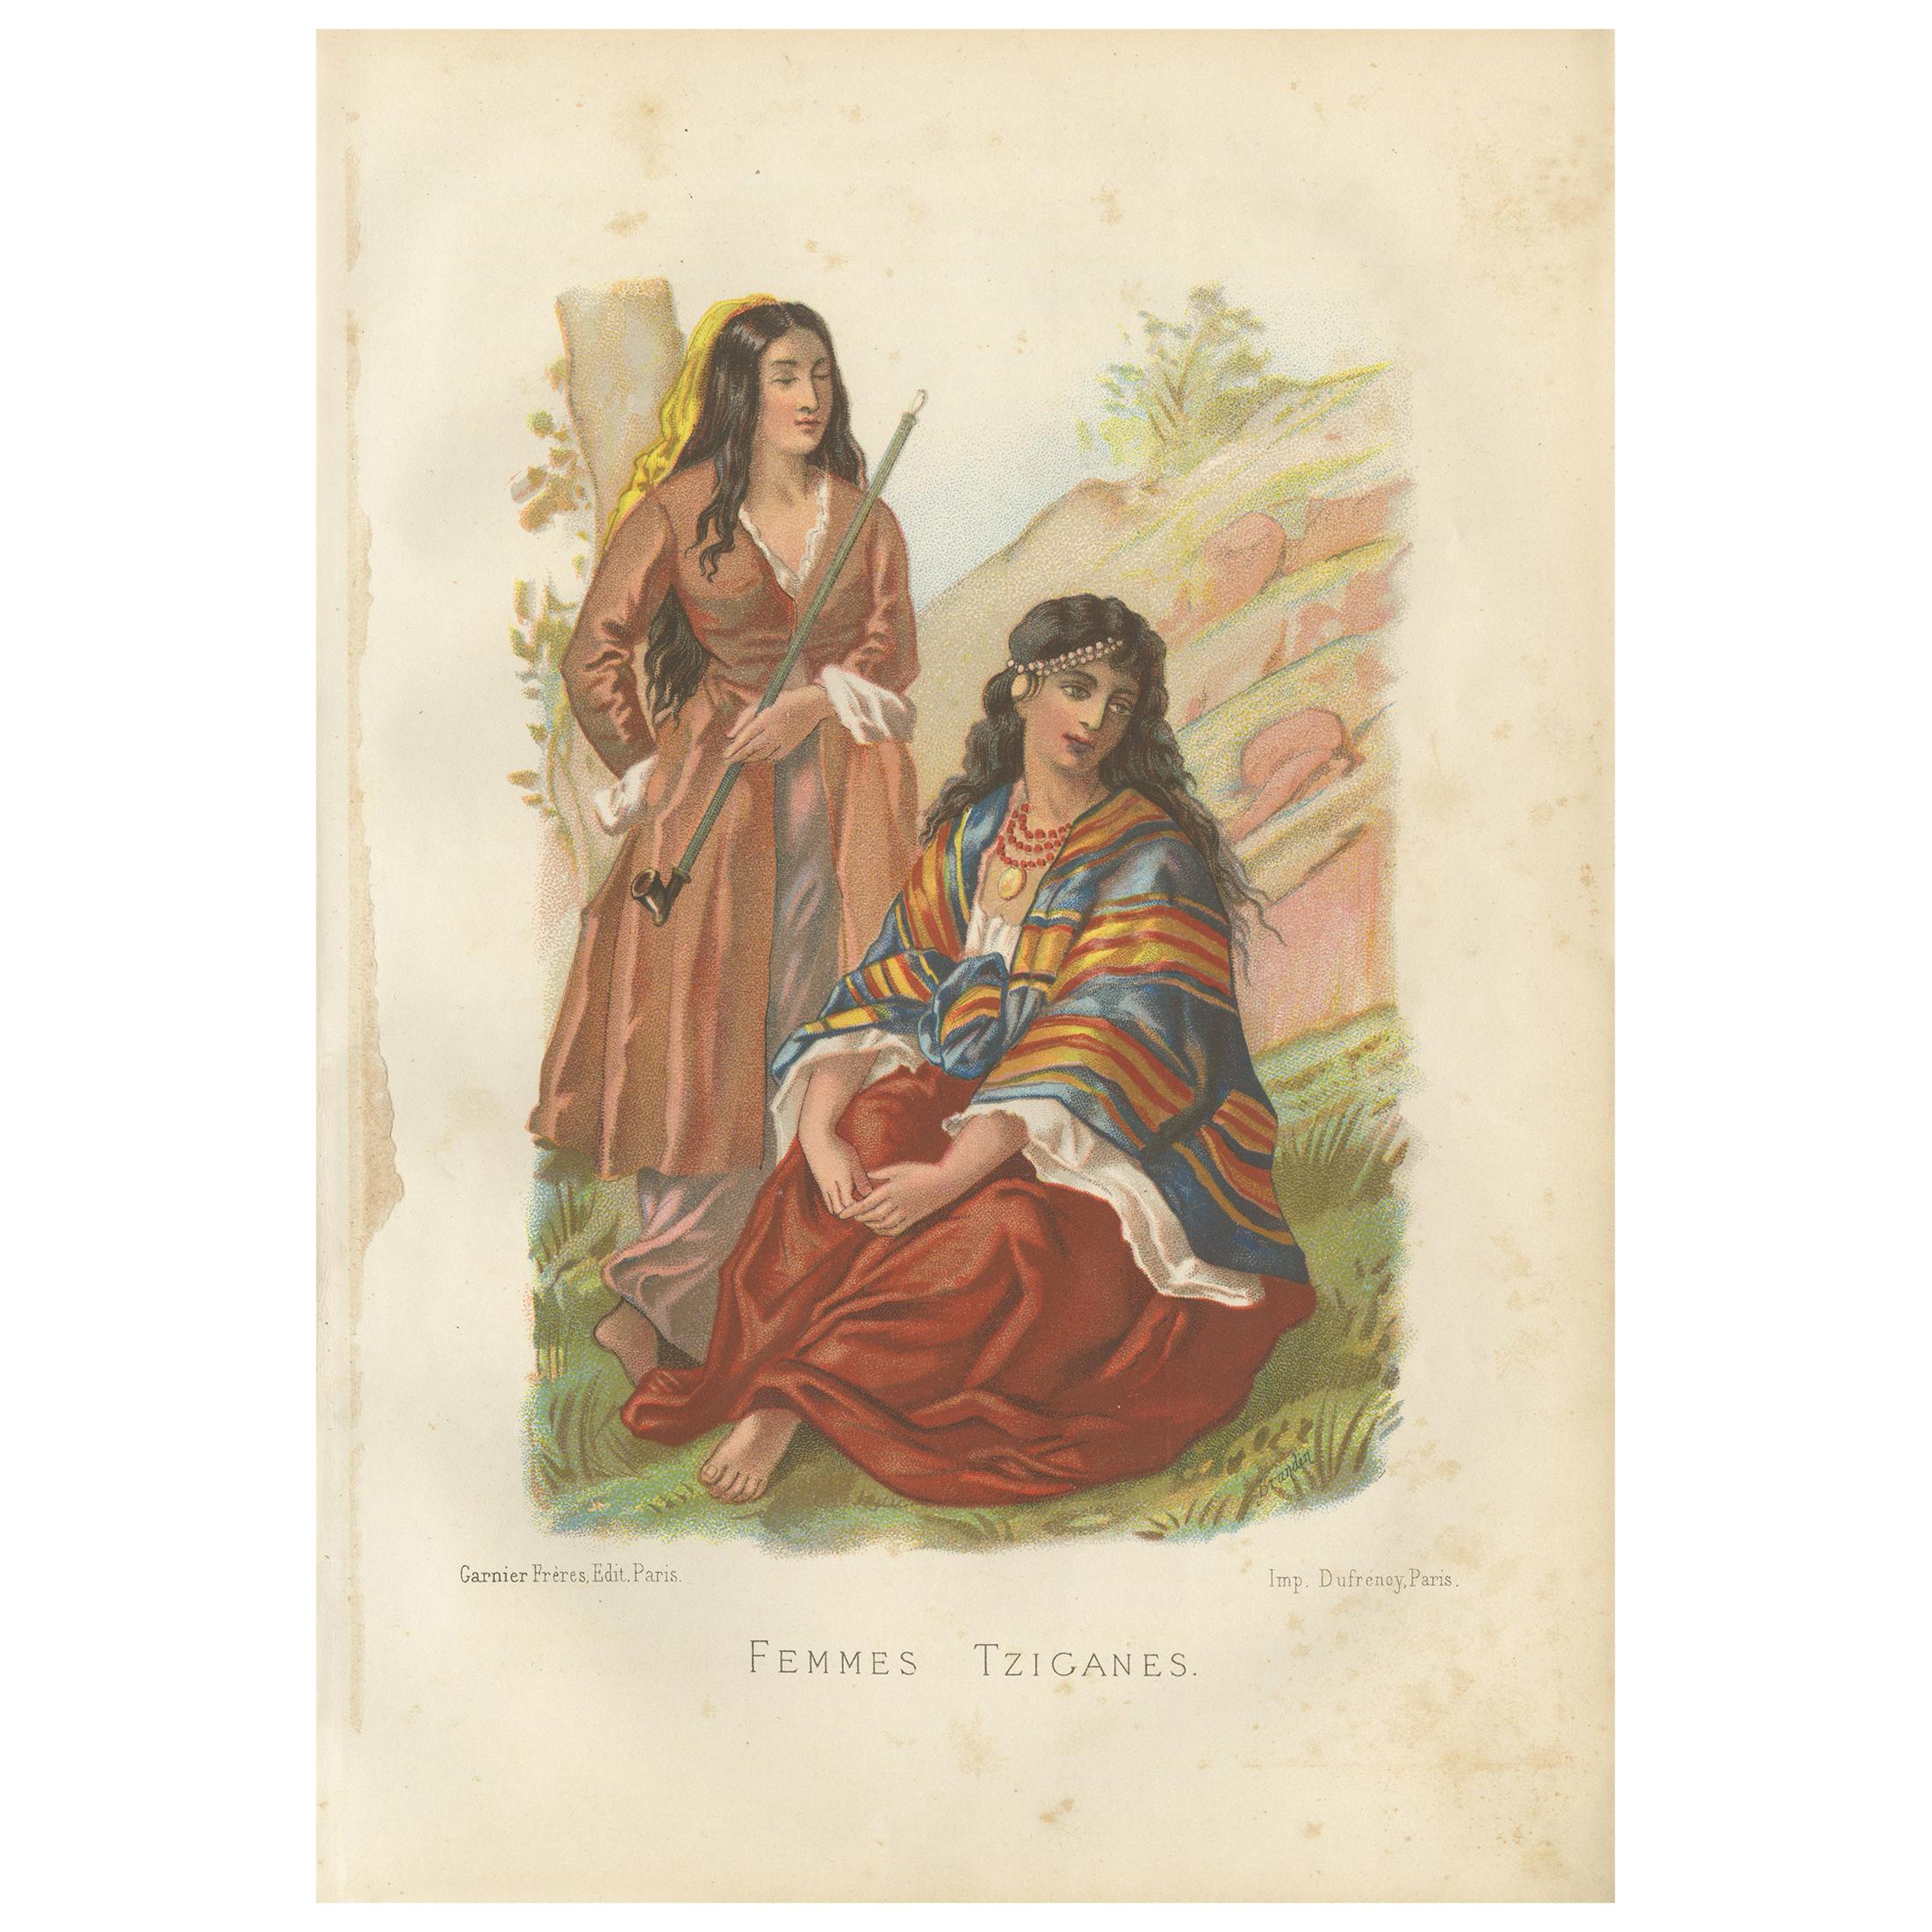 Antique Print of Gypsy Women by Grégoire, '1883'